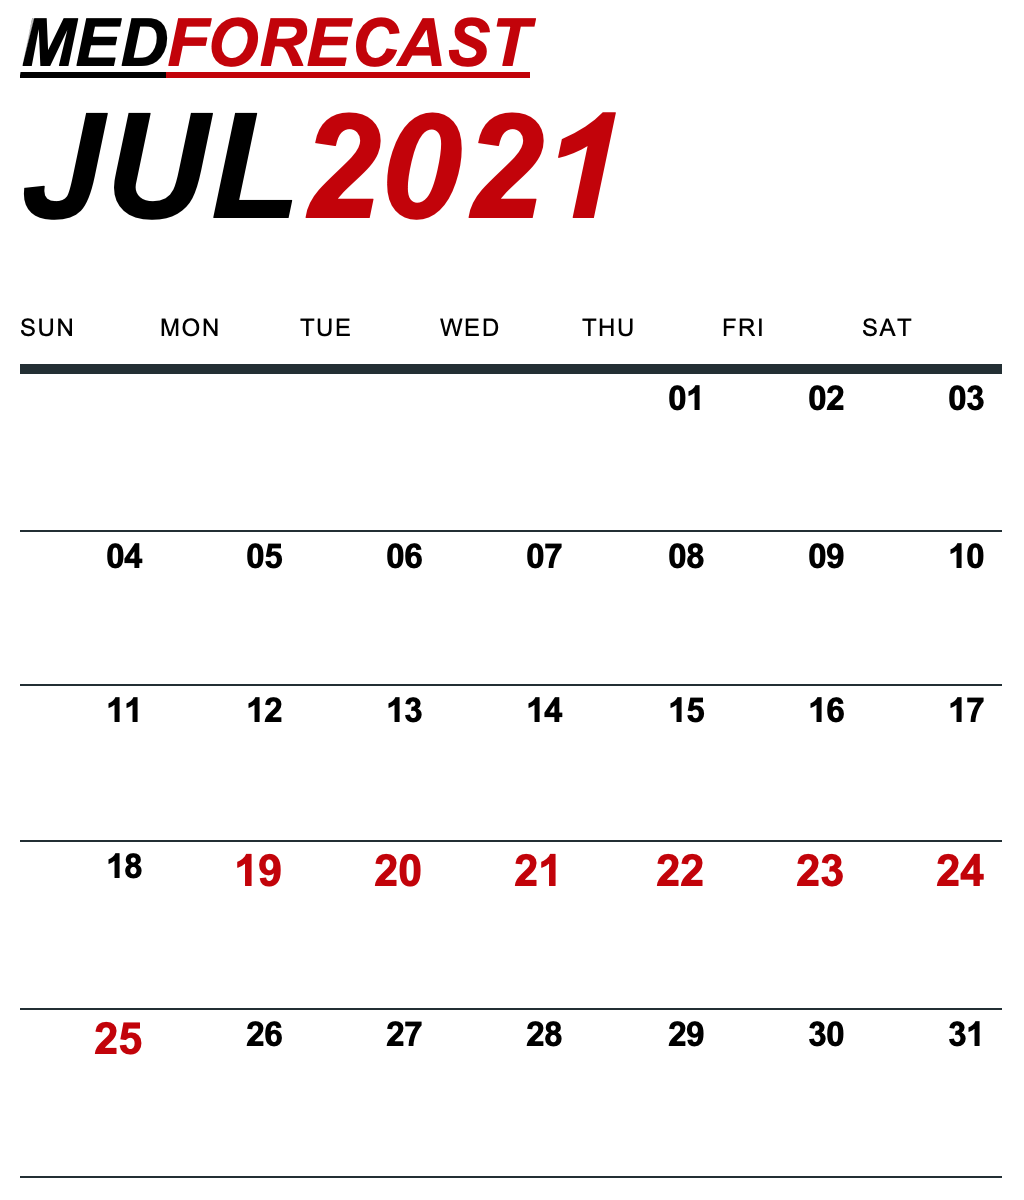 Medical News Forecast for July 19-25